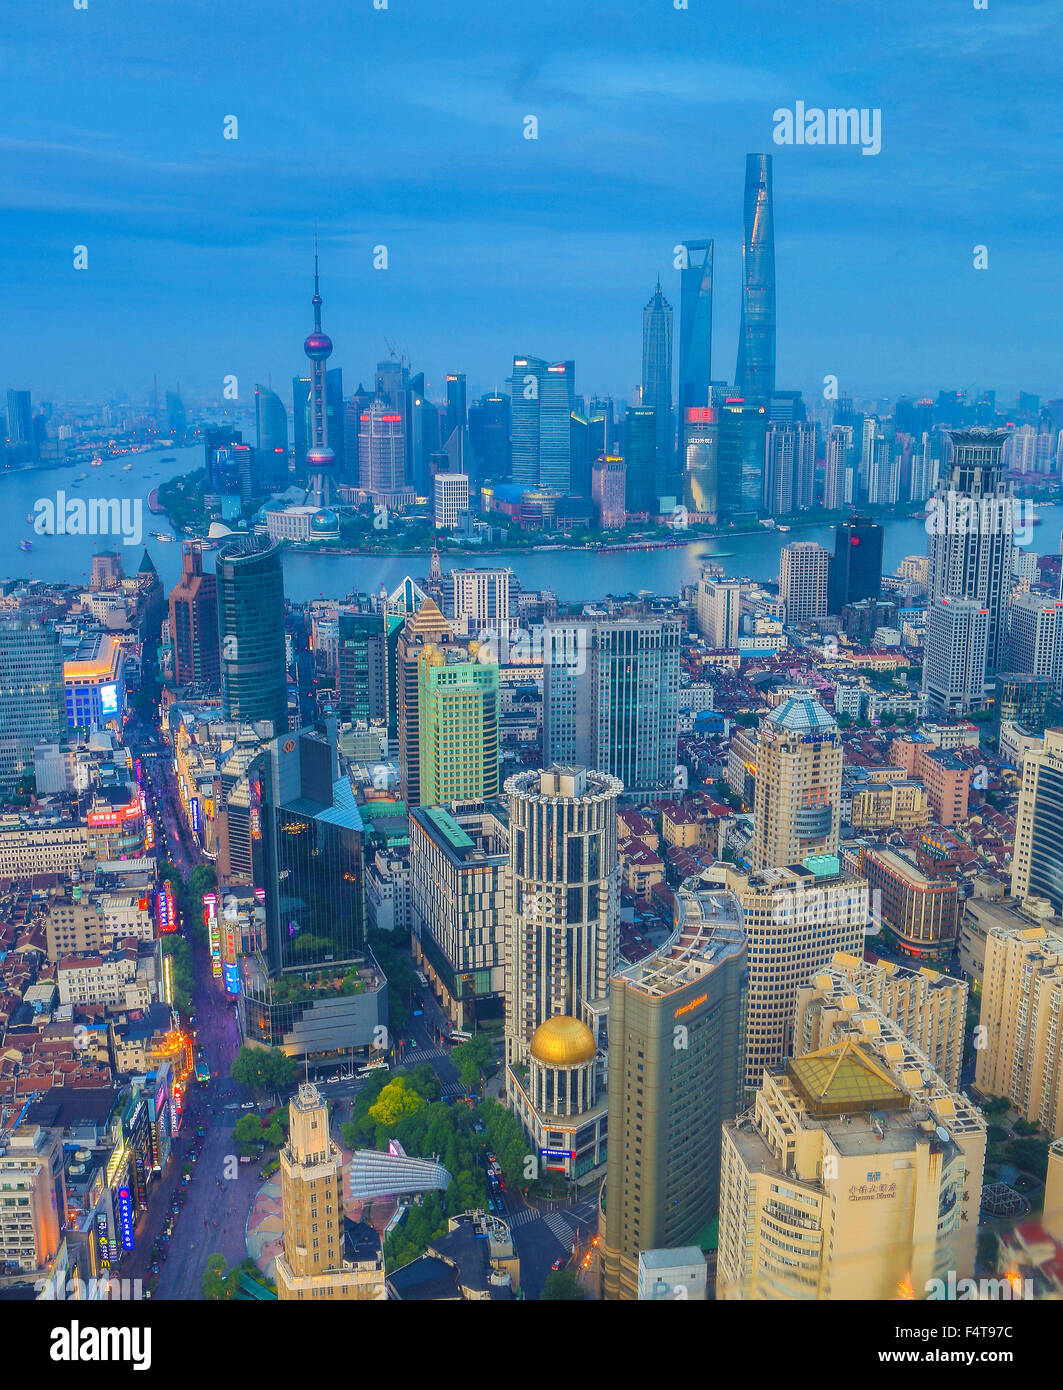 Cina Shanghai City, il Bund e il Pudong district skyline, Fiume Huangpu Foto Stock